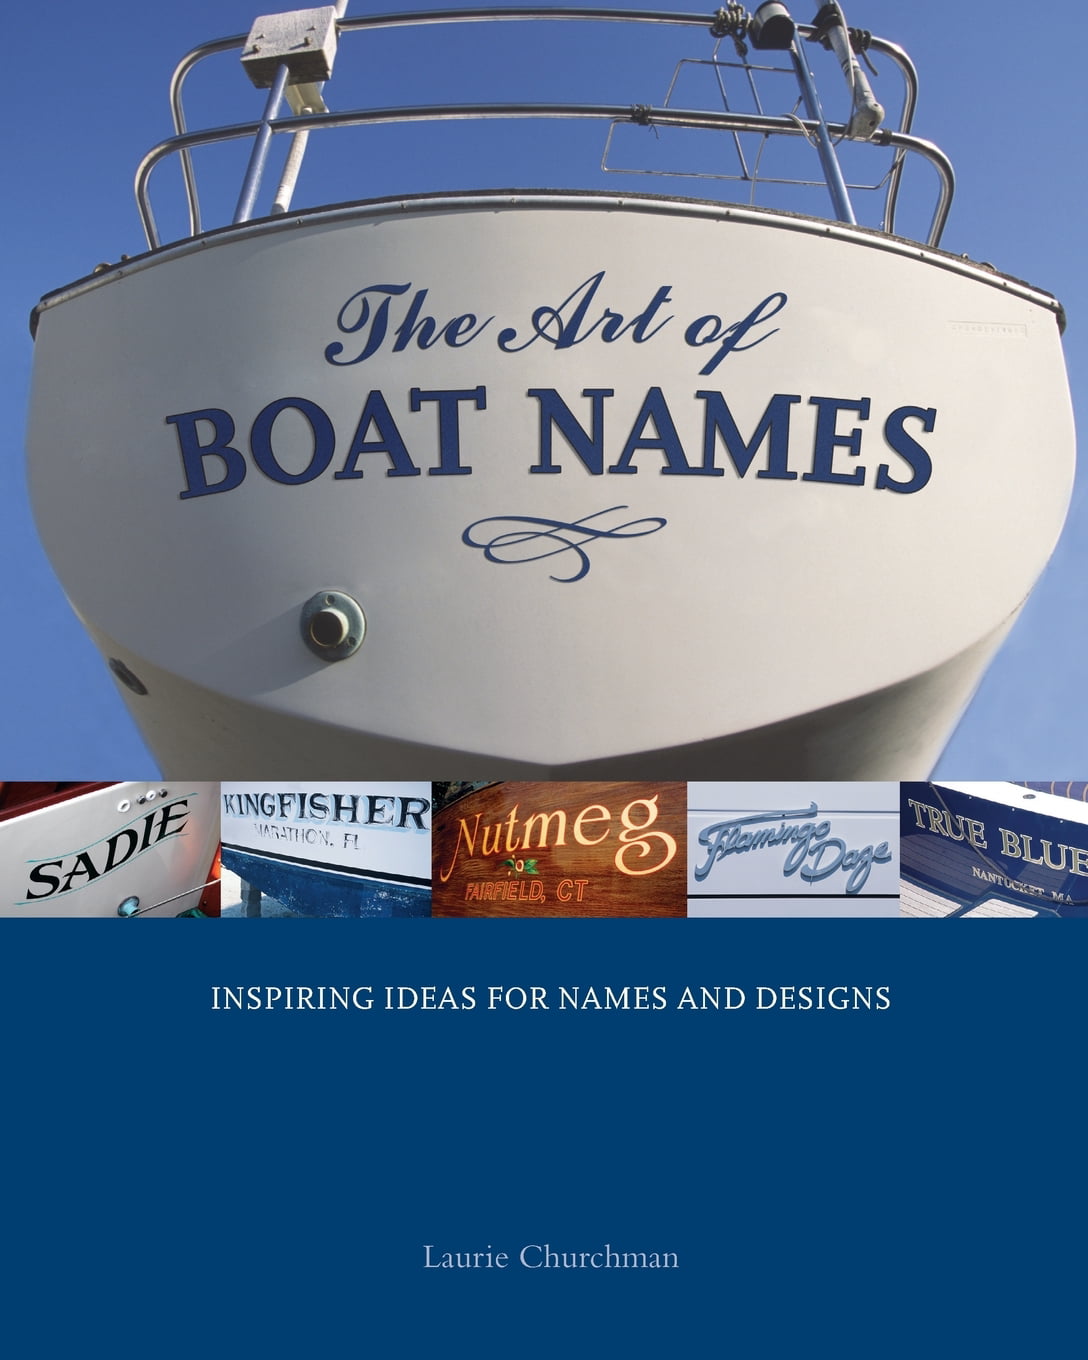 sailboat crew names